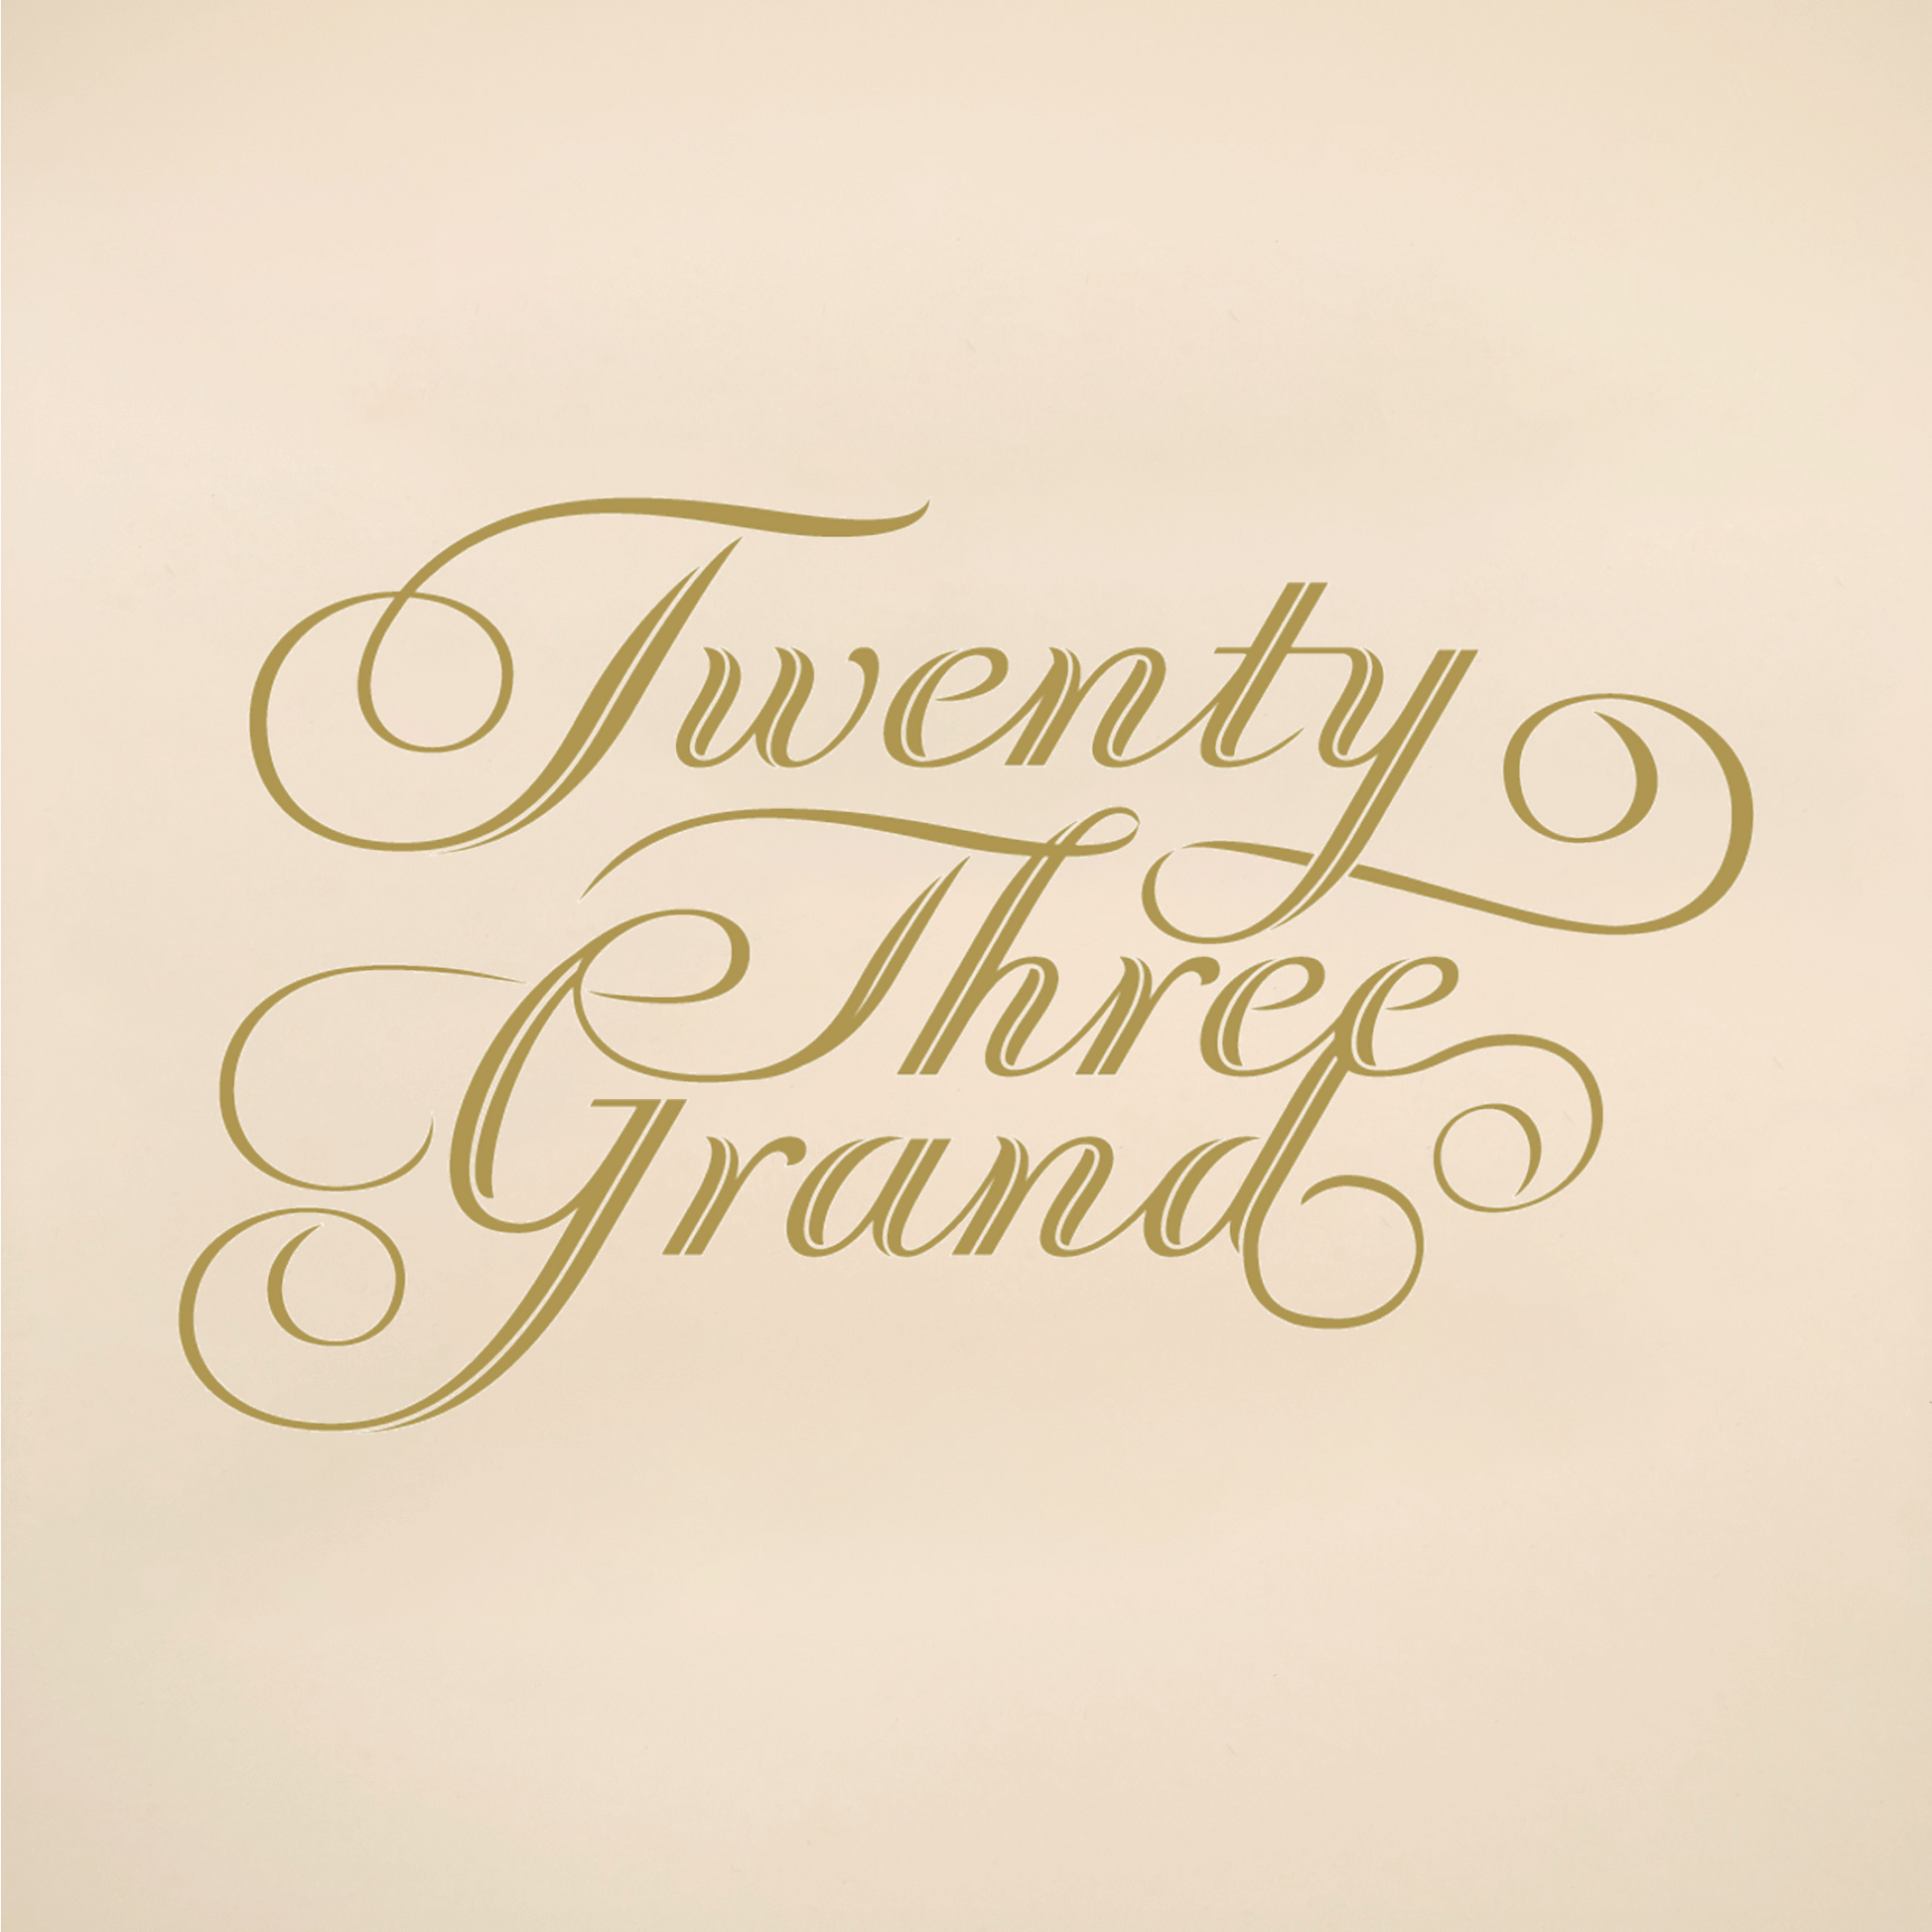 twenty three grand